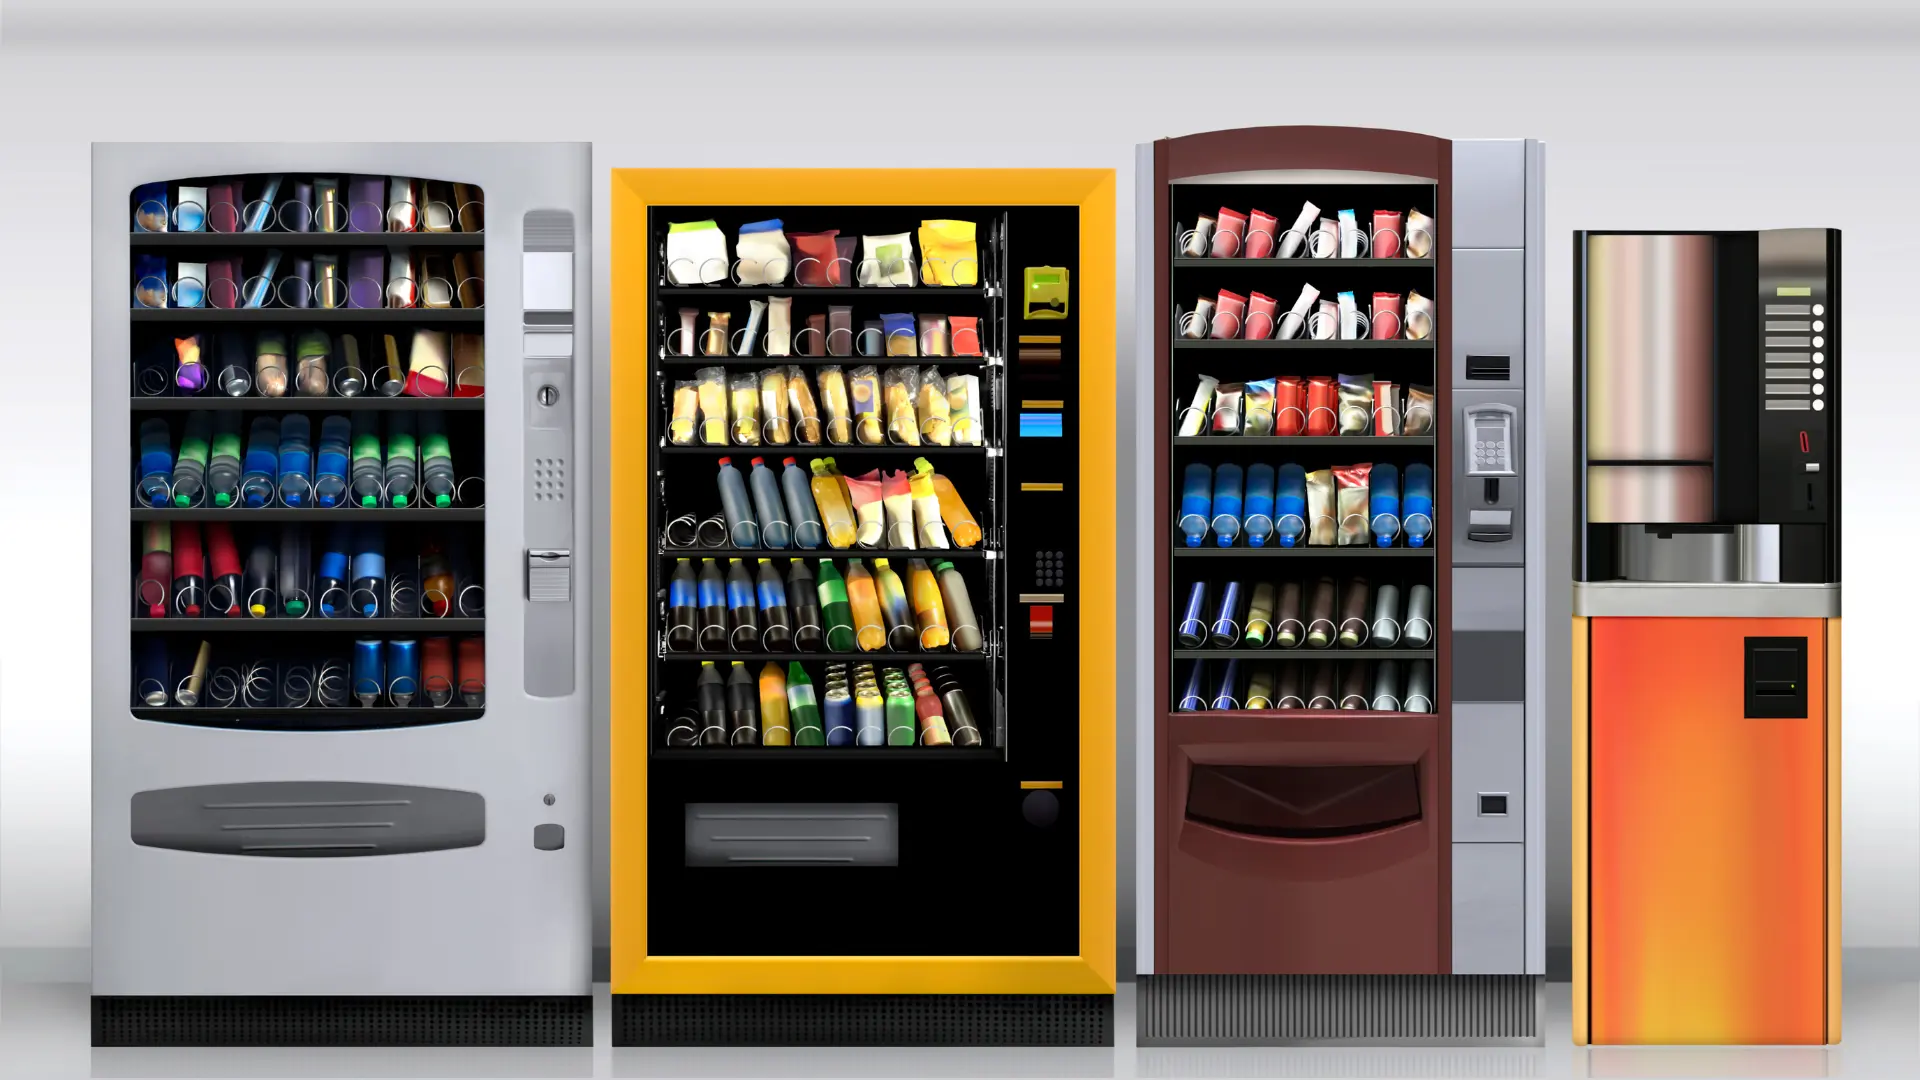 vending machines image